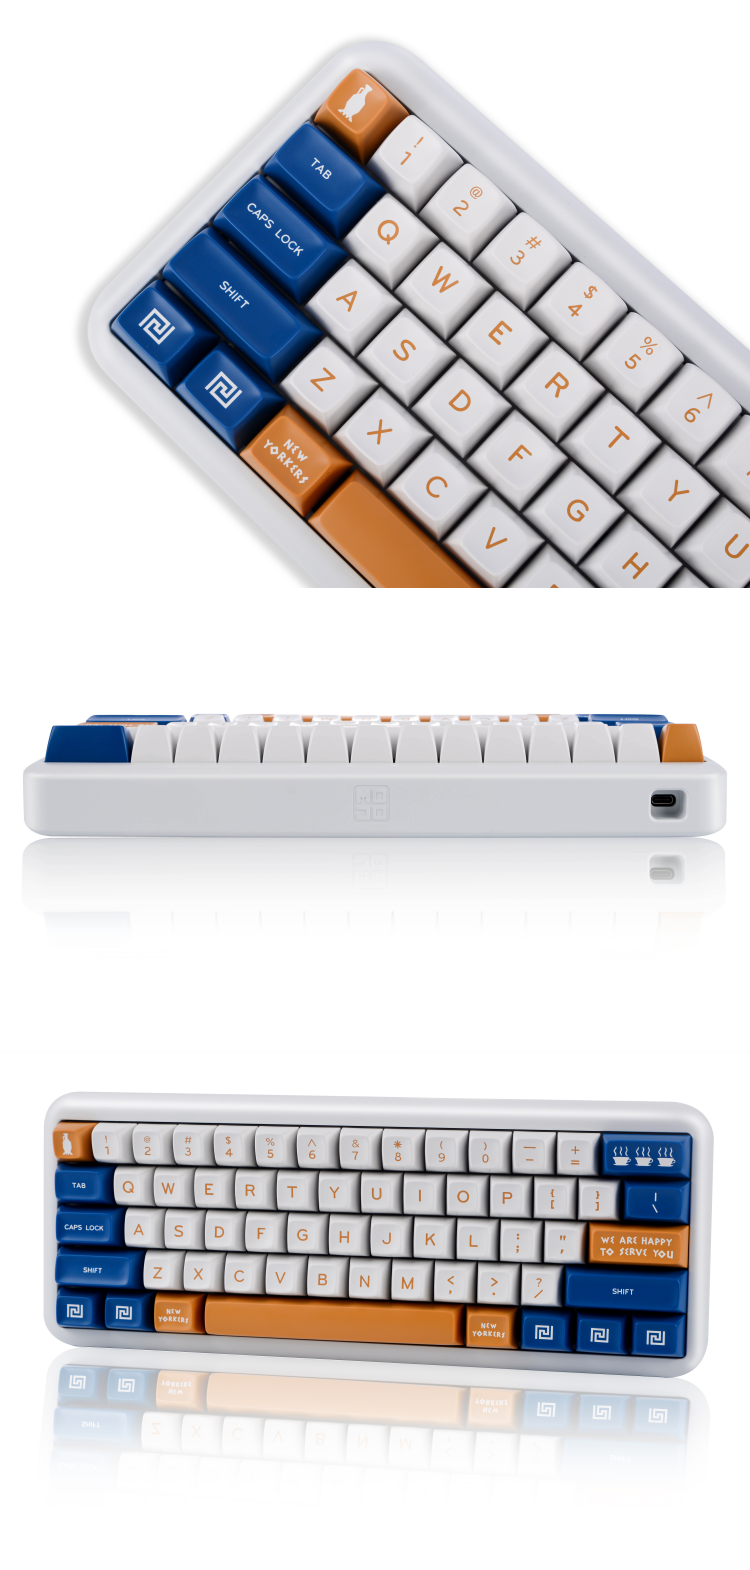 MelGeek Mojo60 Aluminum Mechanical Keyboard Case 60% Keyboard Chasis